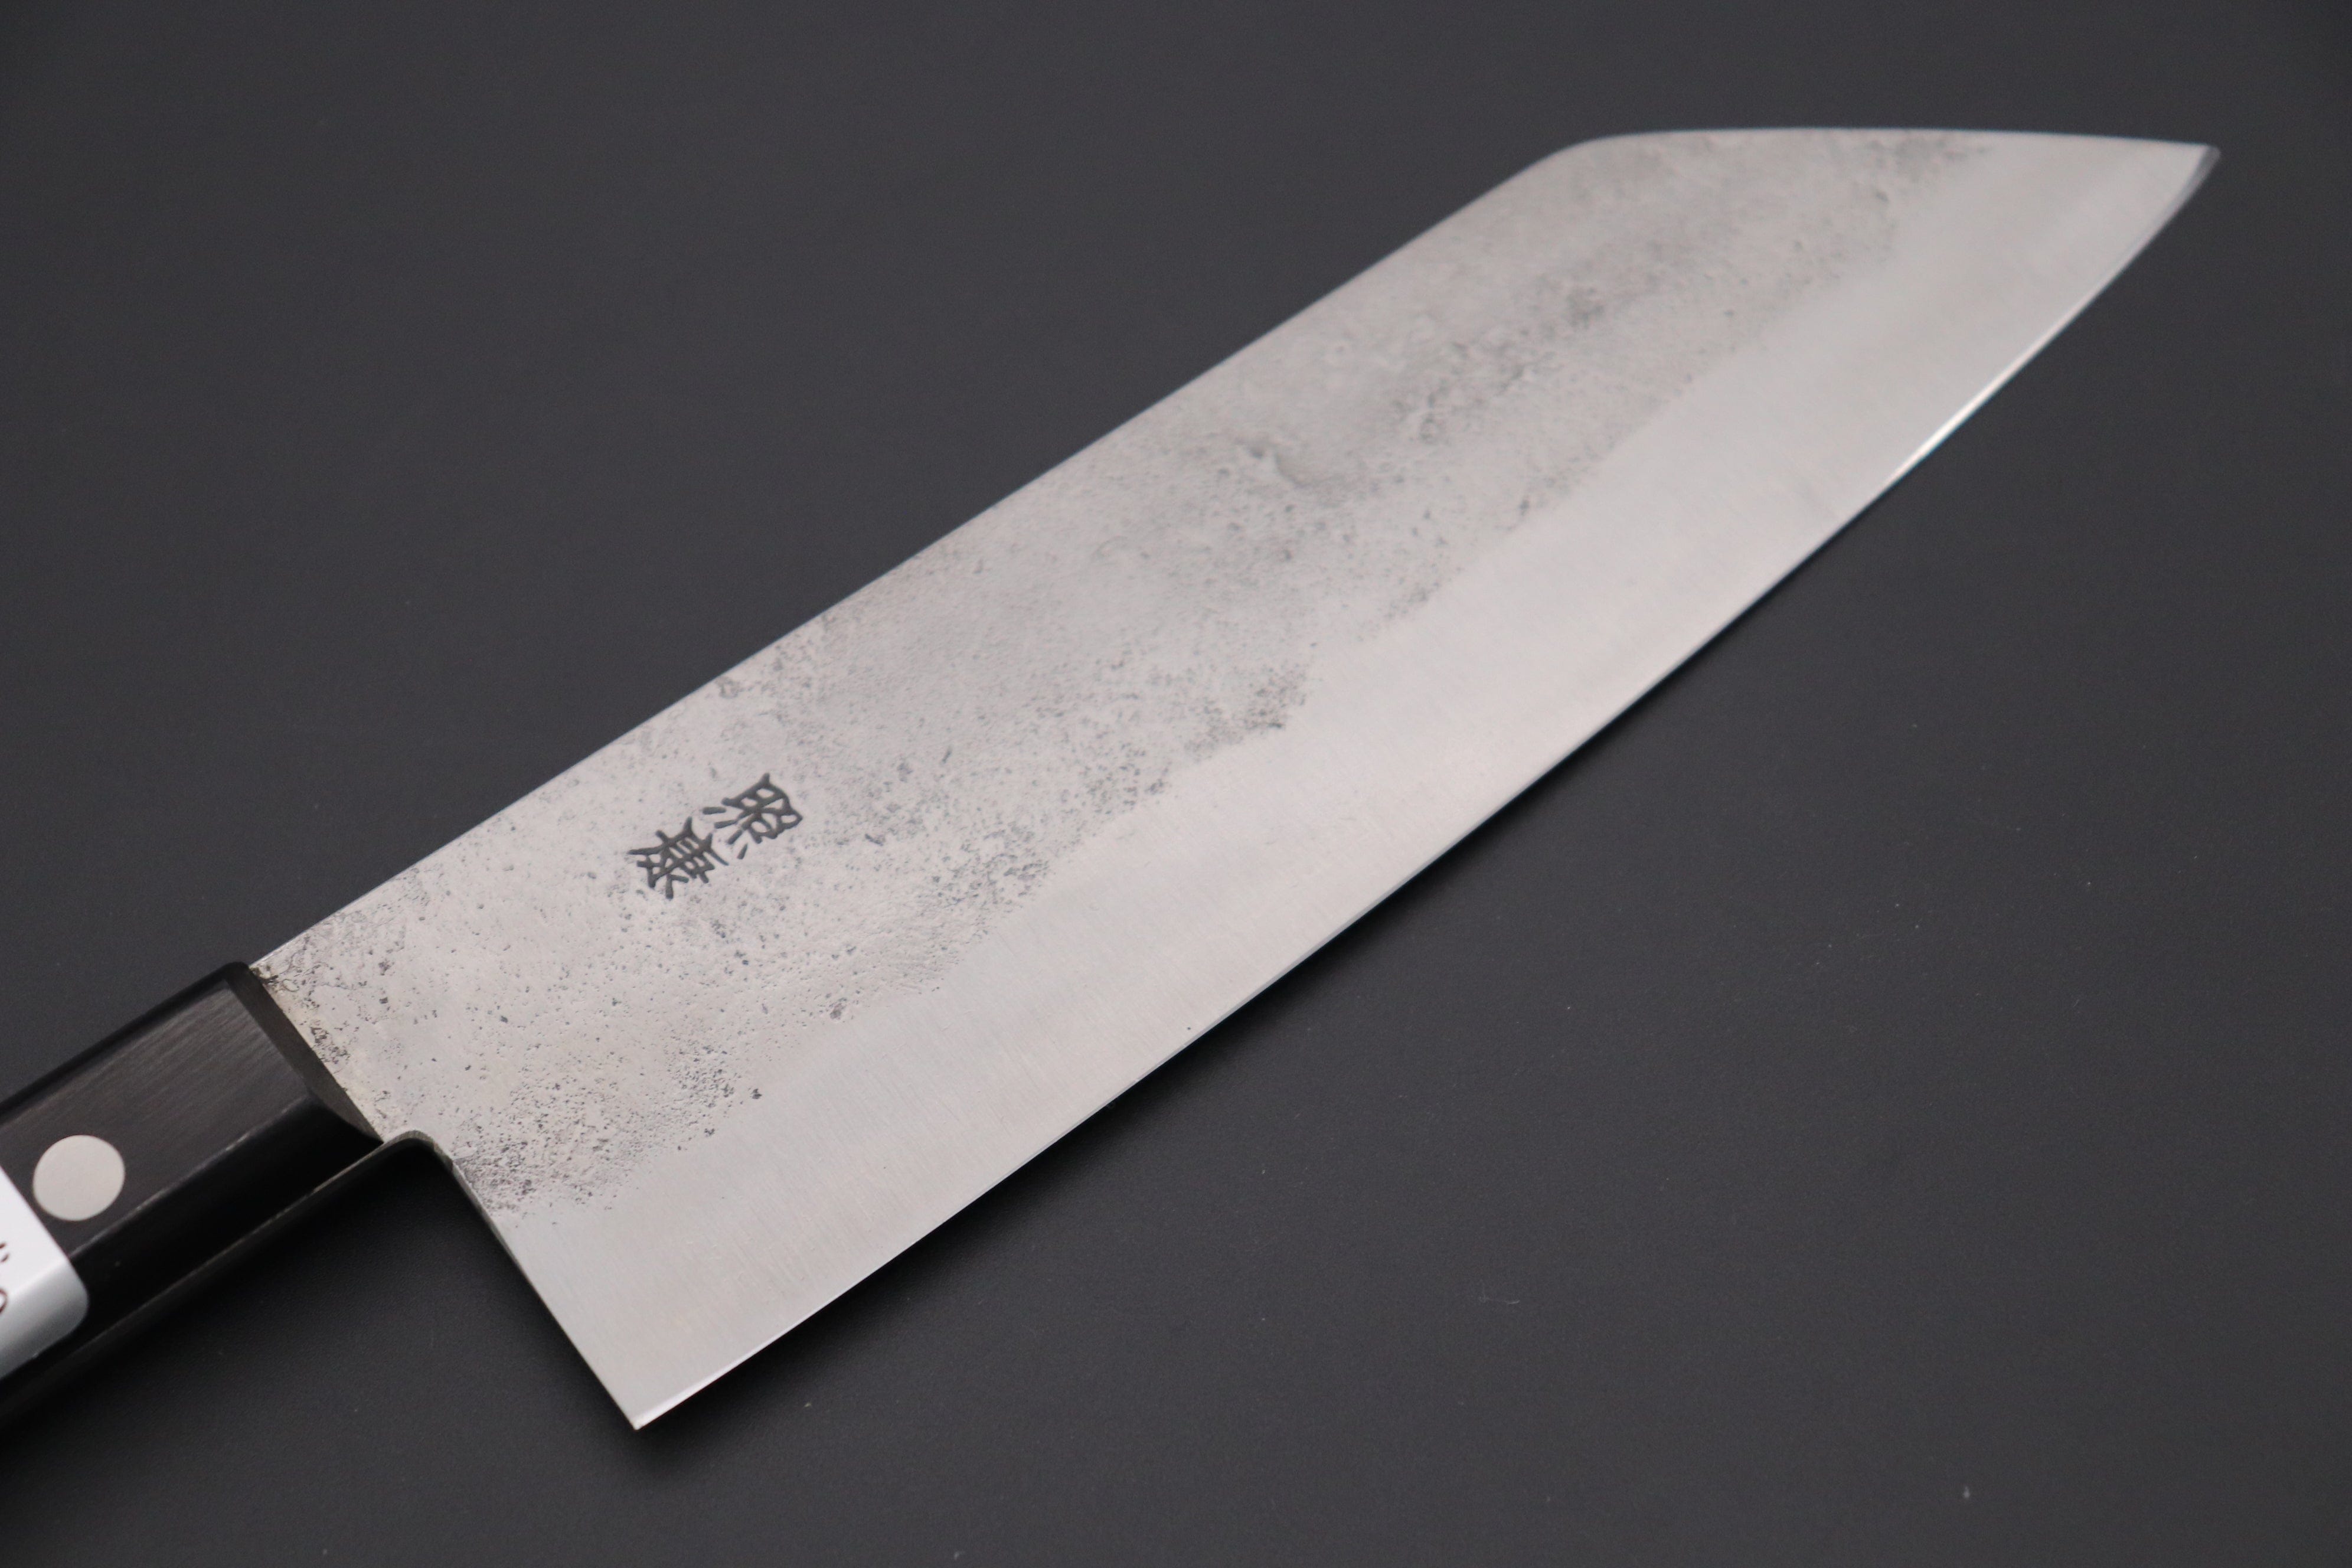 White Bark Workwear x JKI Knife Roll - Japanese Knife Imports